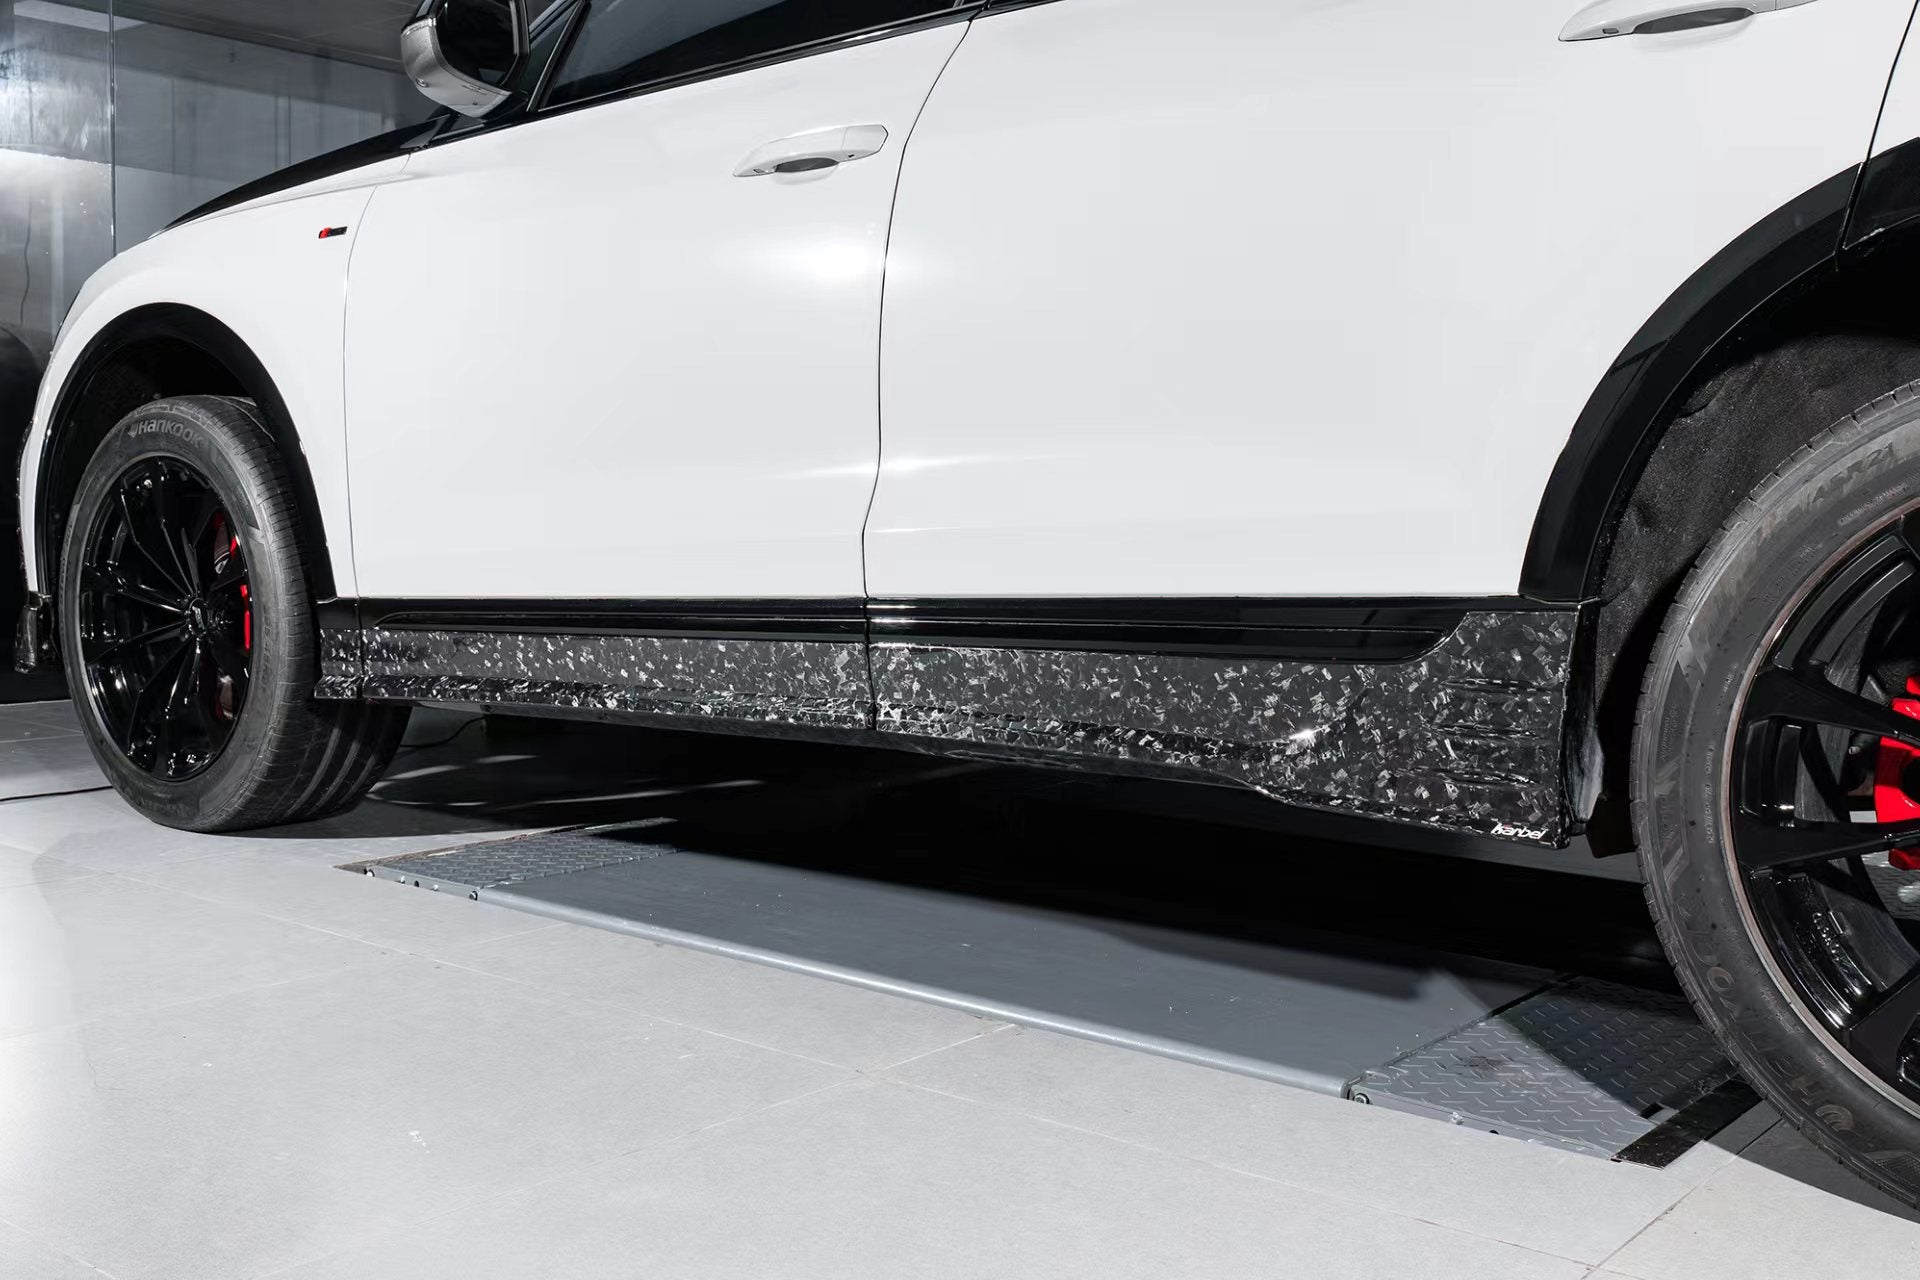 Karbel Carbon Pre-preg Carbon Fiber Full Body Kit For Audi SQ8 Q8 S-line 2020-2022